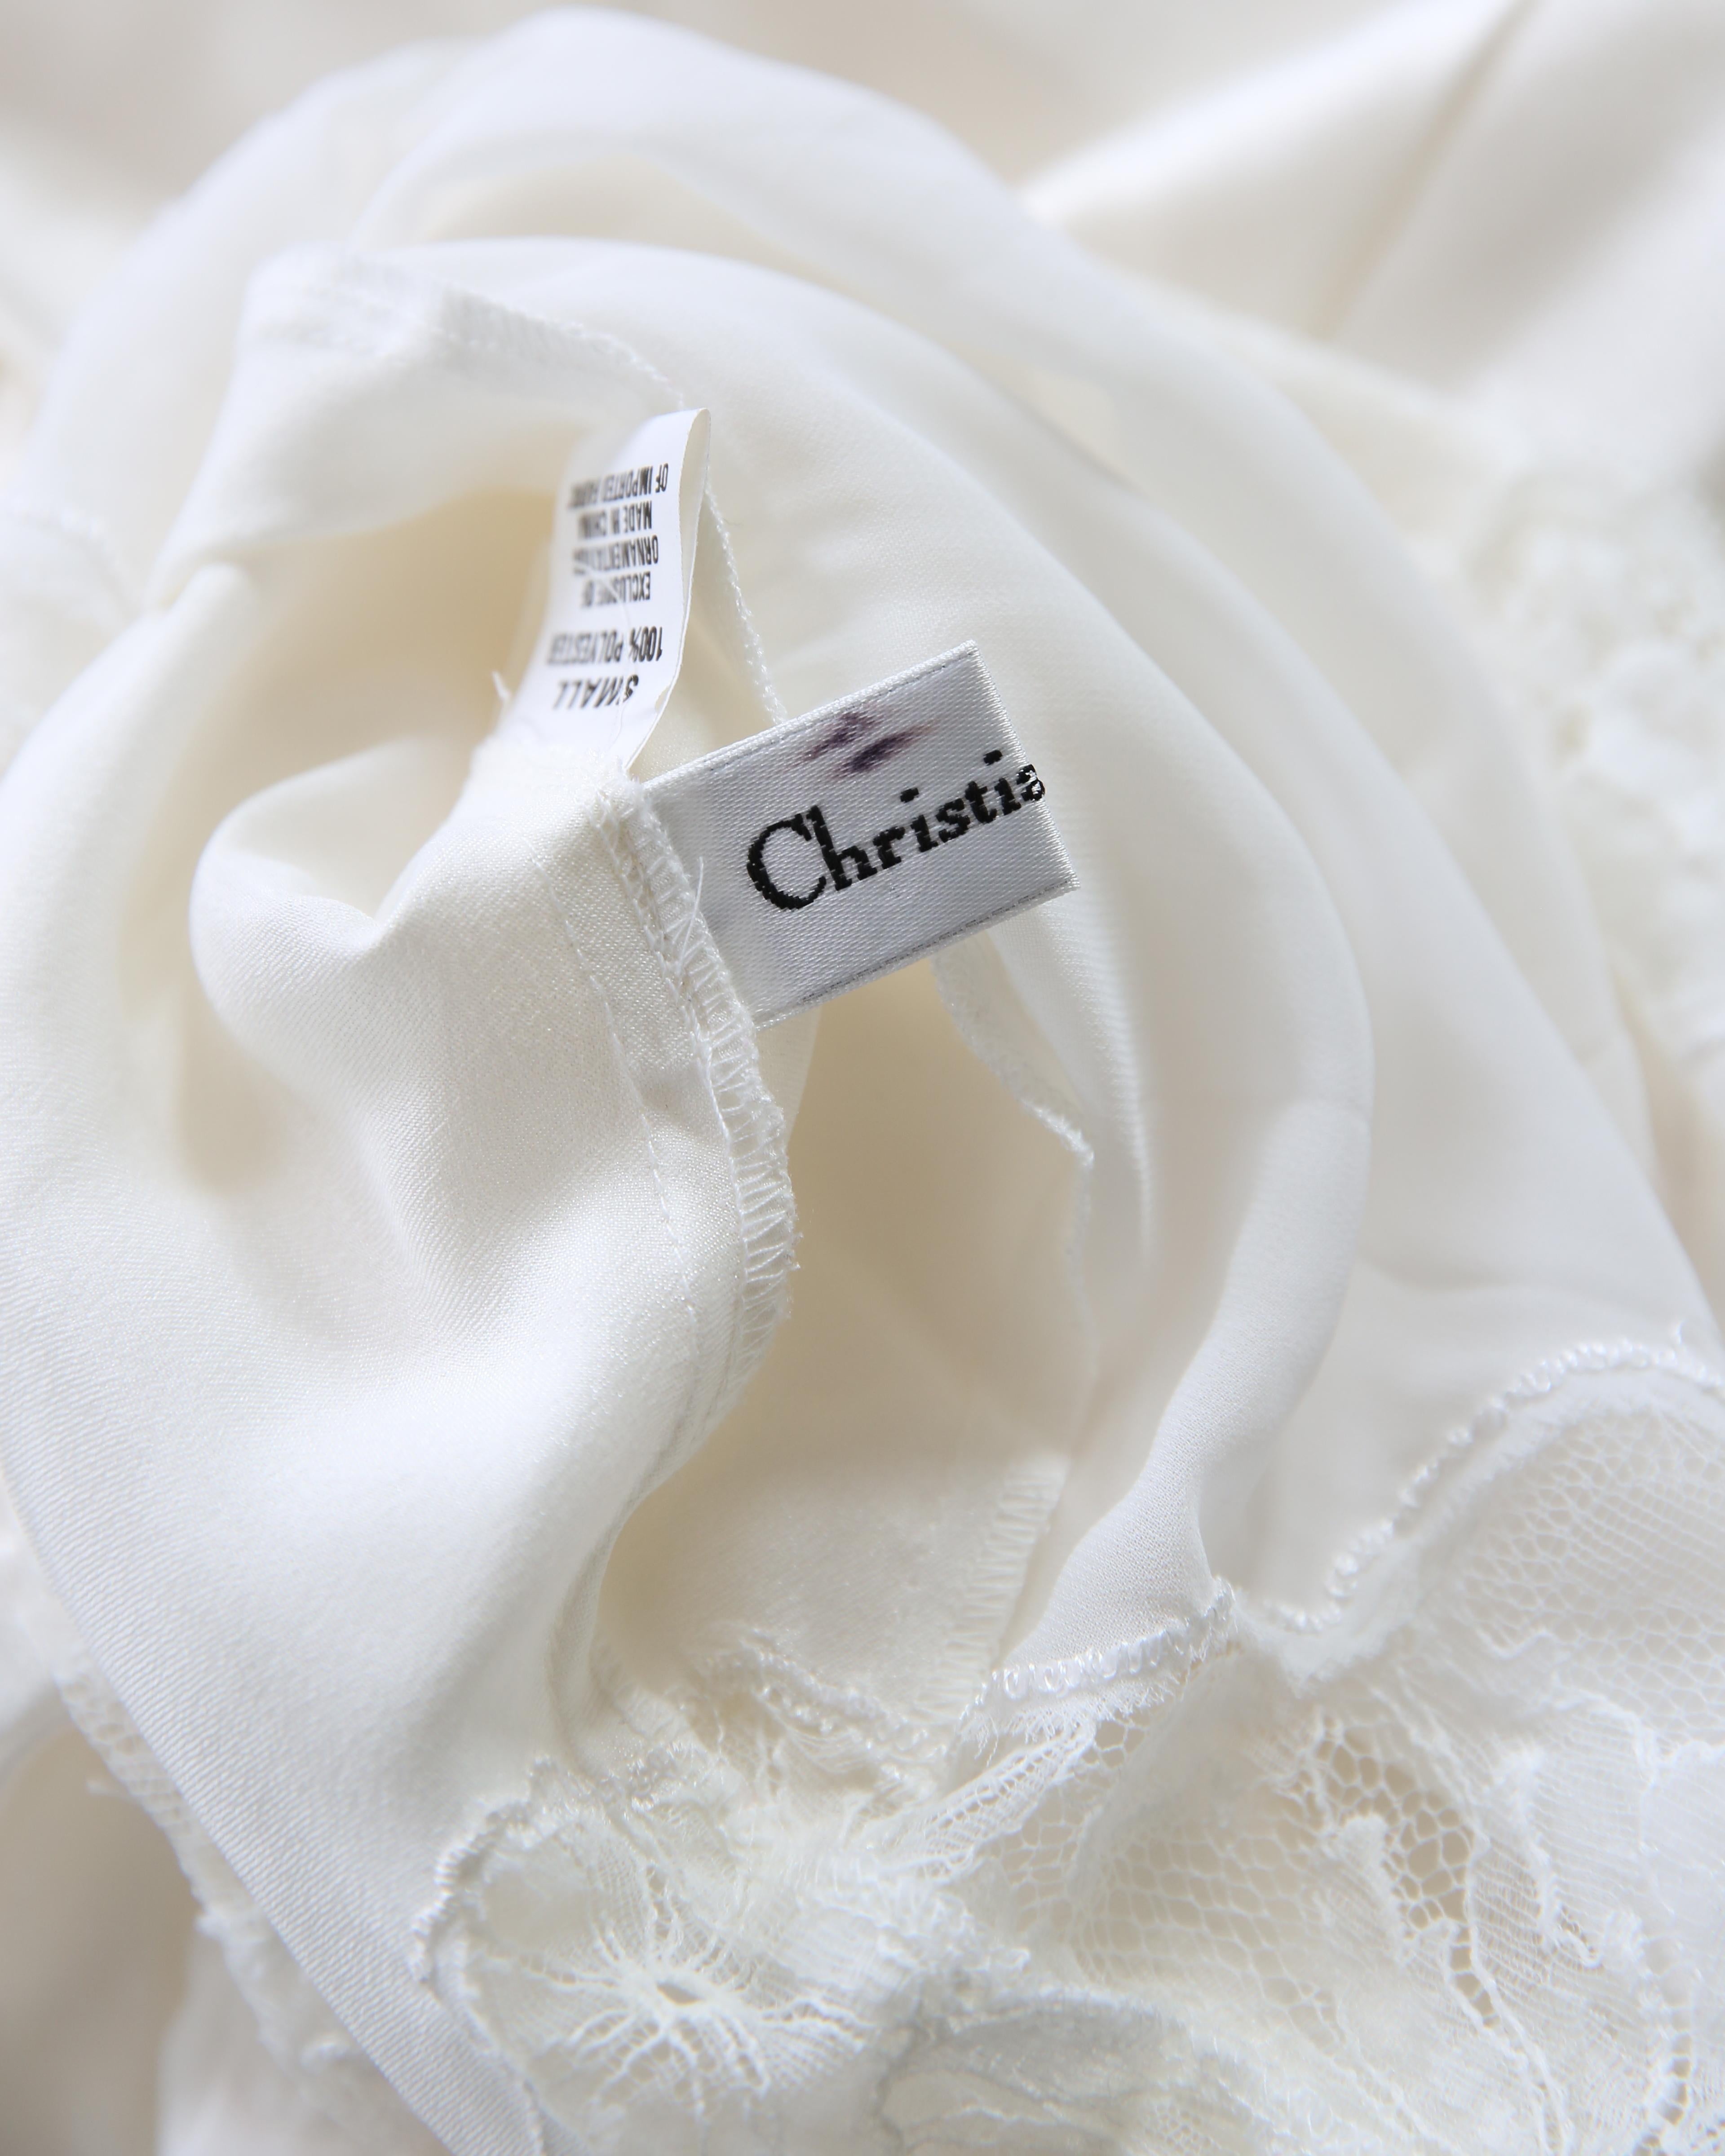 Women's Christian Dior vintage white ivory satin lace nightgown slip robe midi dress